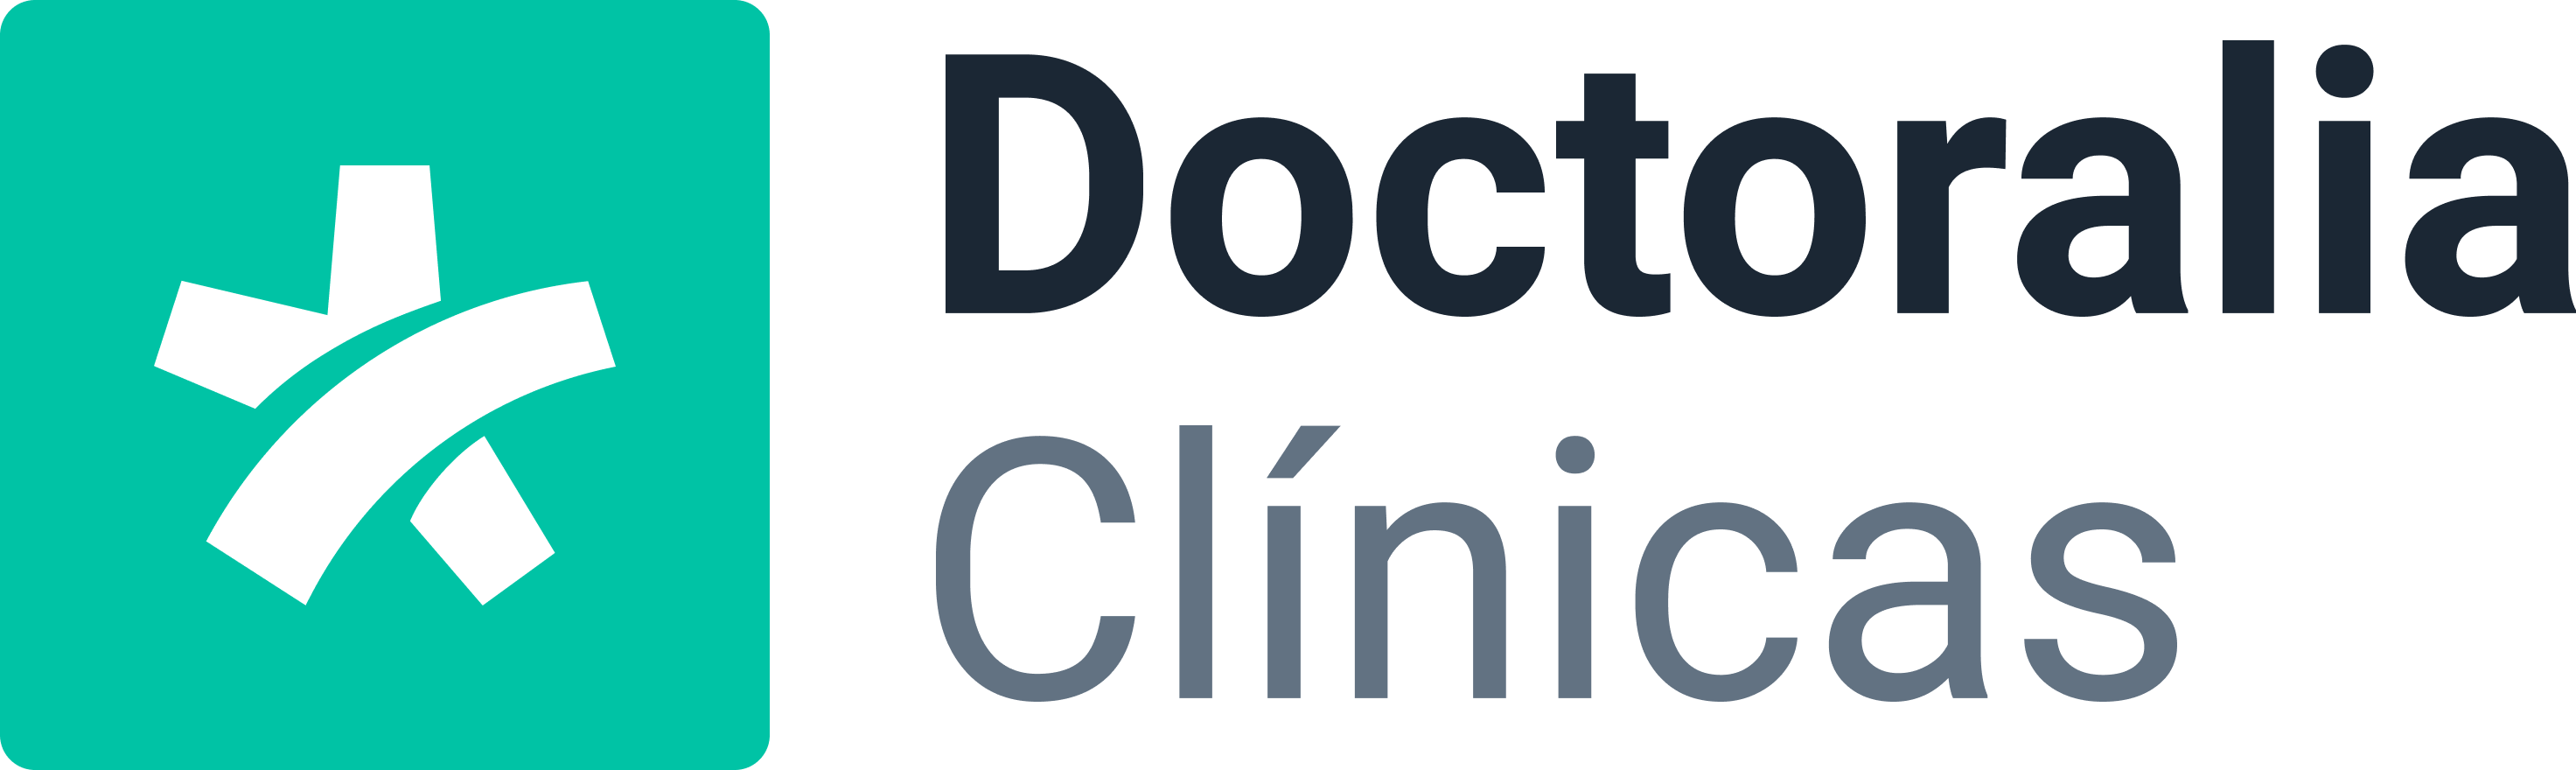 doctoralia-clinicas-logo-primary-dark